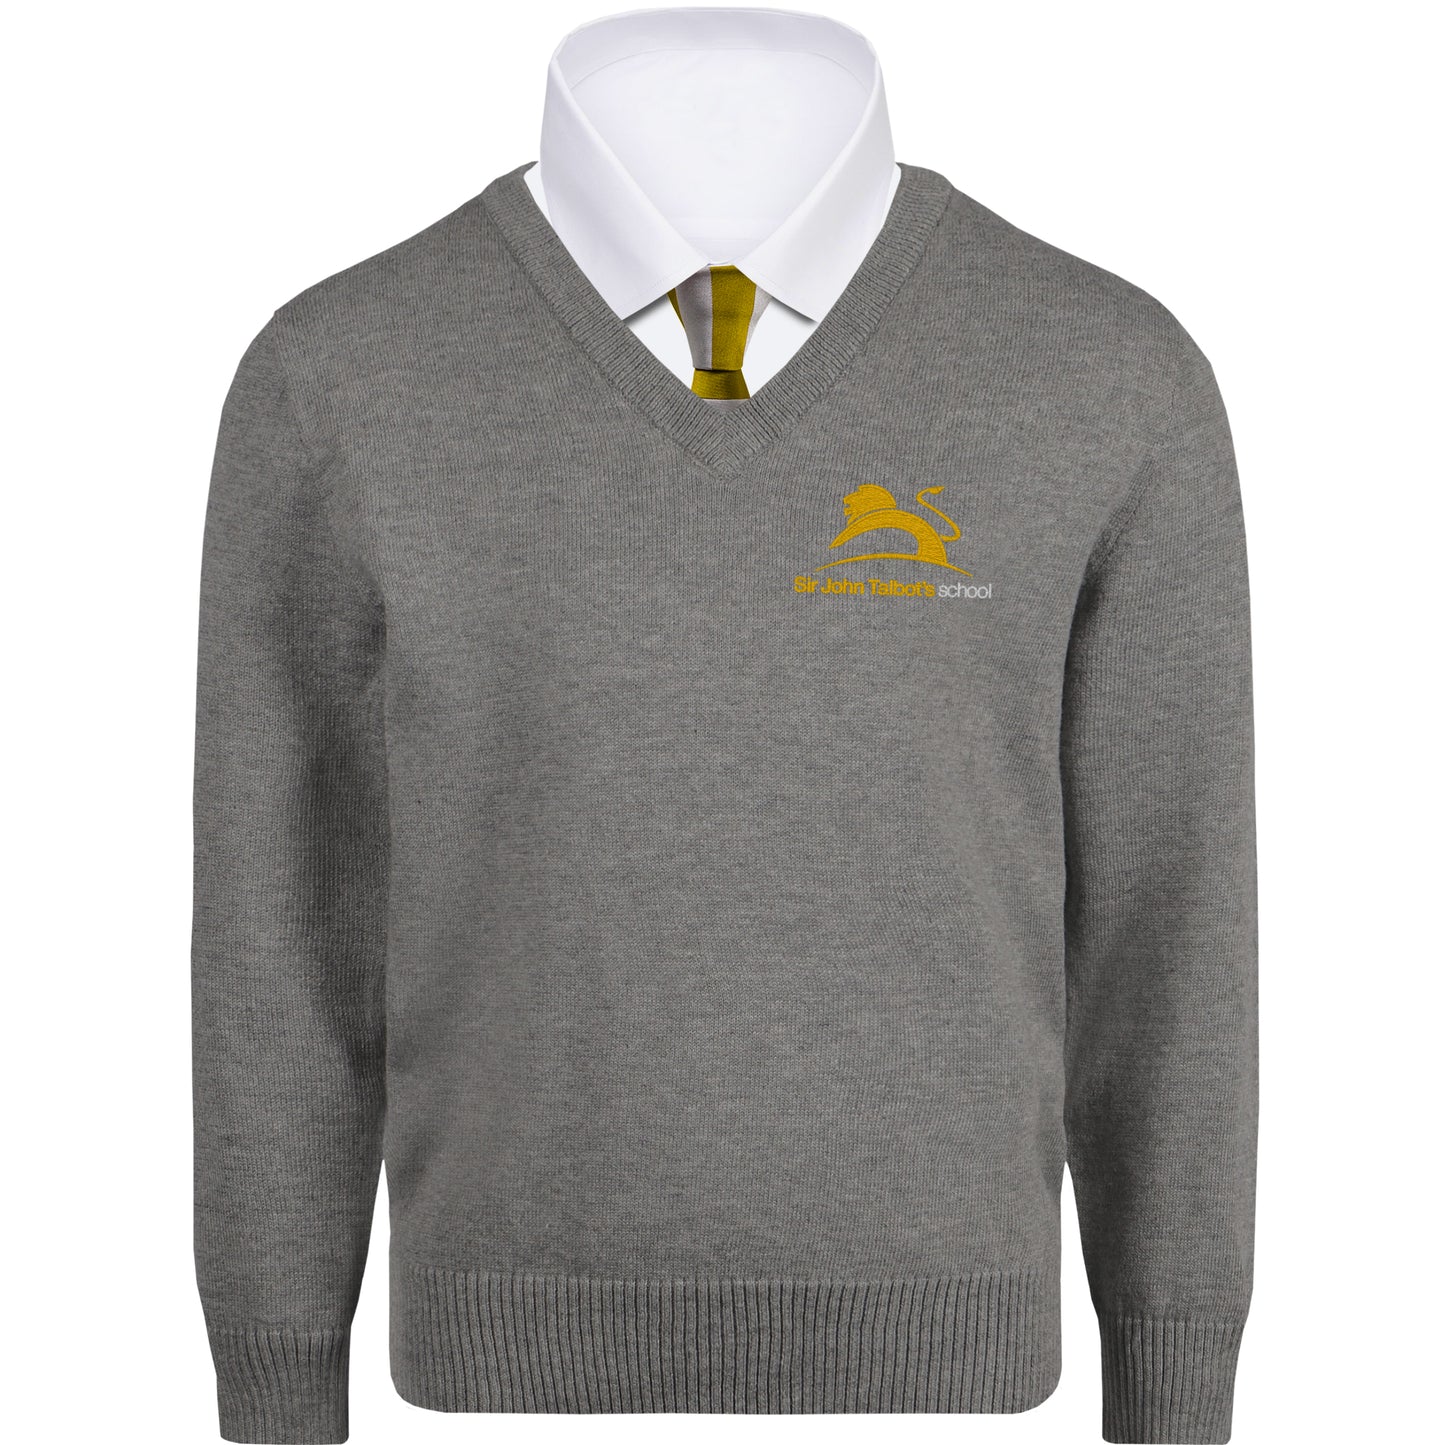 Sir John Talbot's School Grey Sweater 